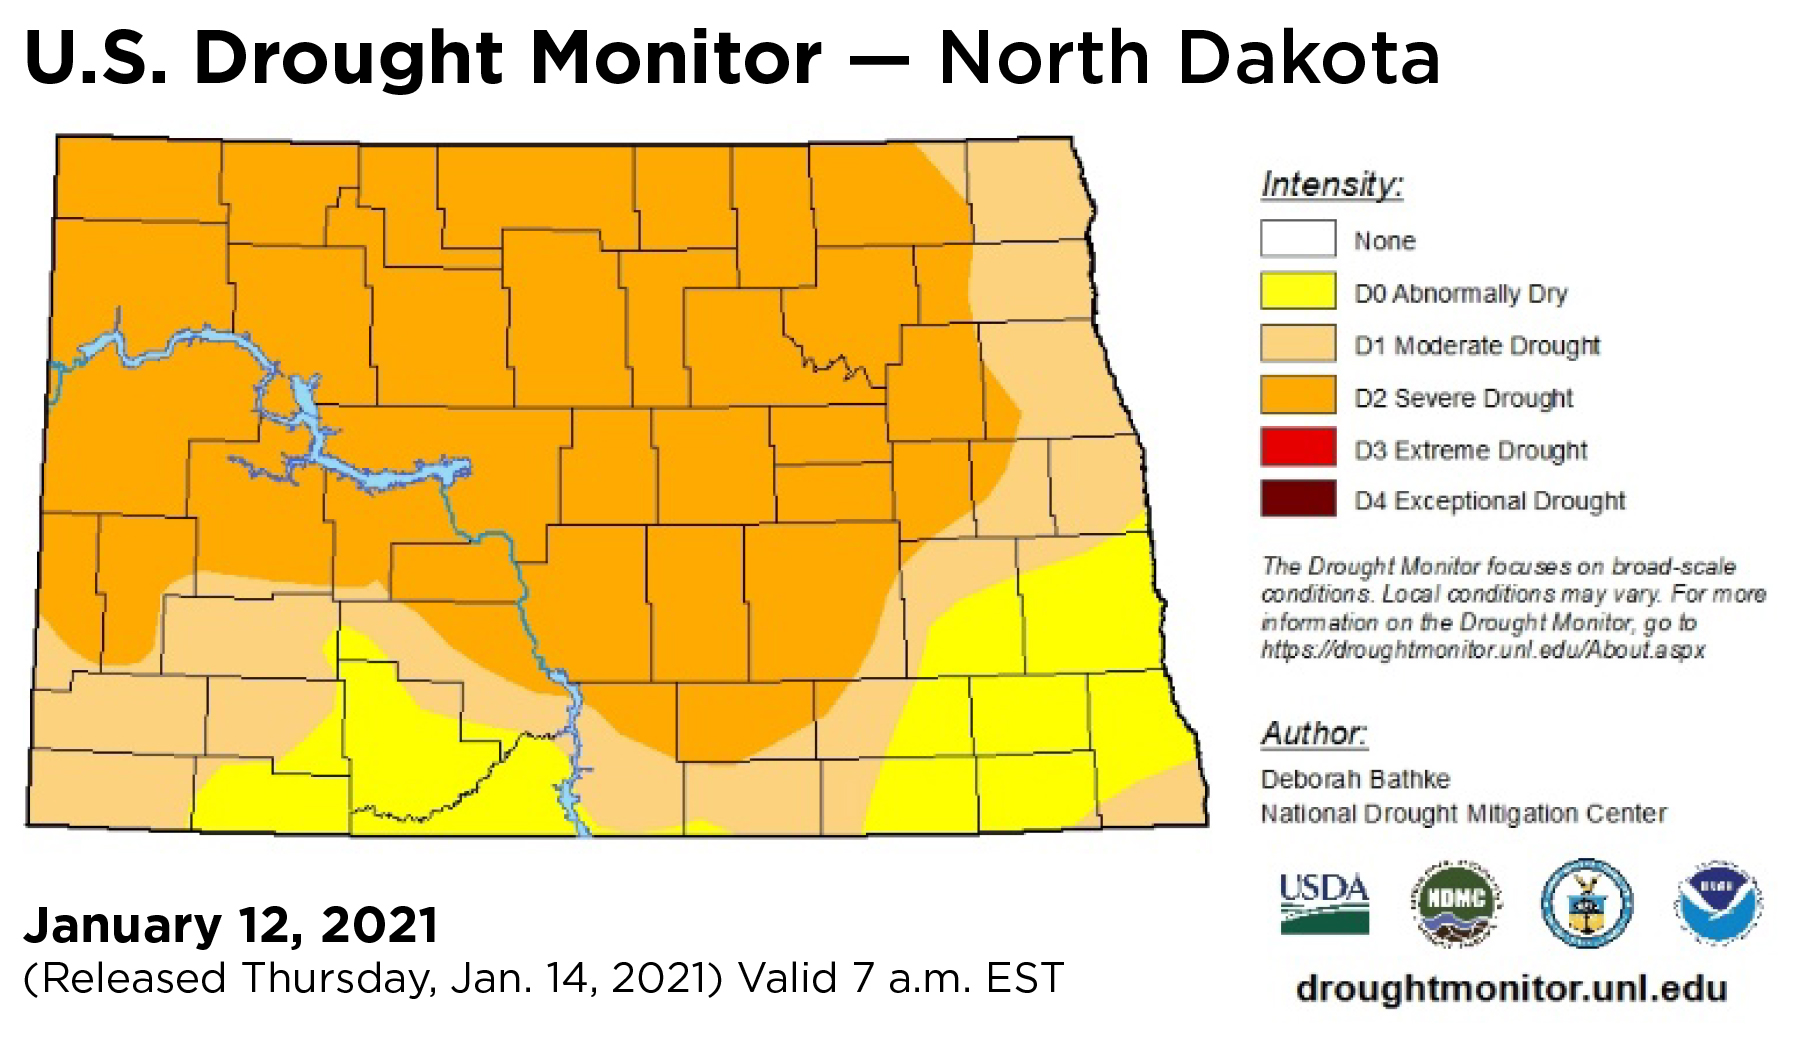 U.S. Drought Monitor in North Dakota